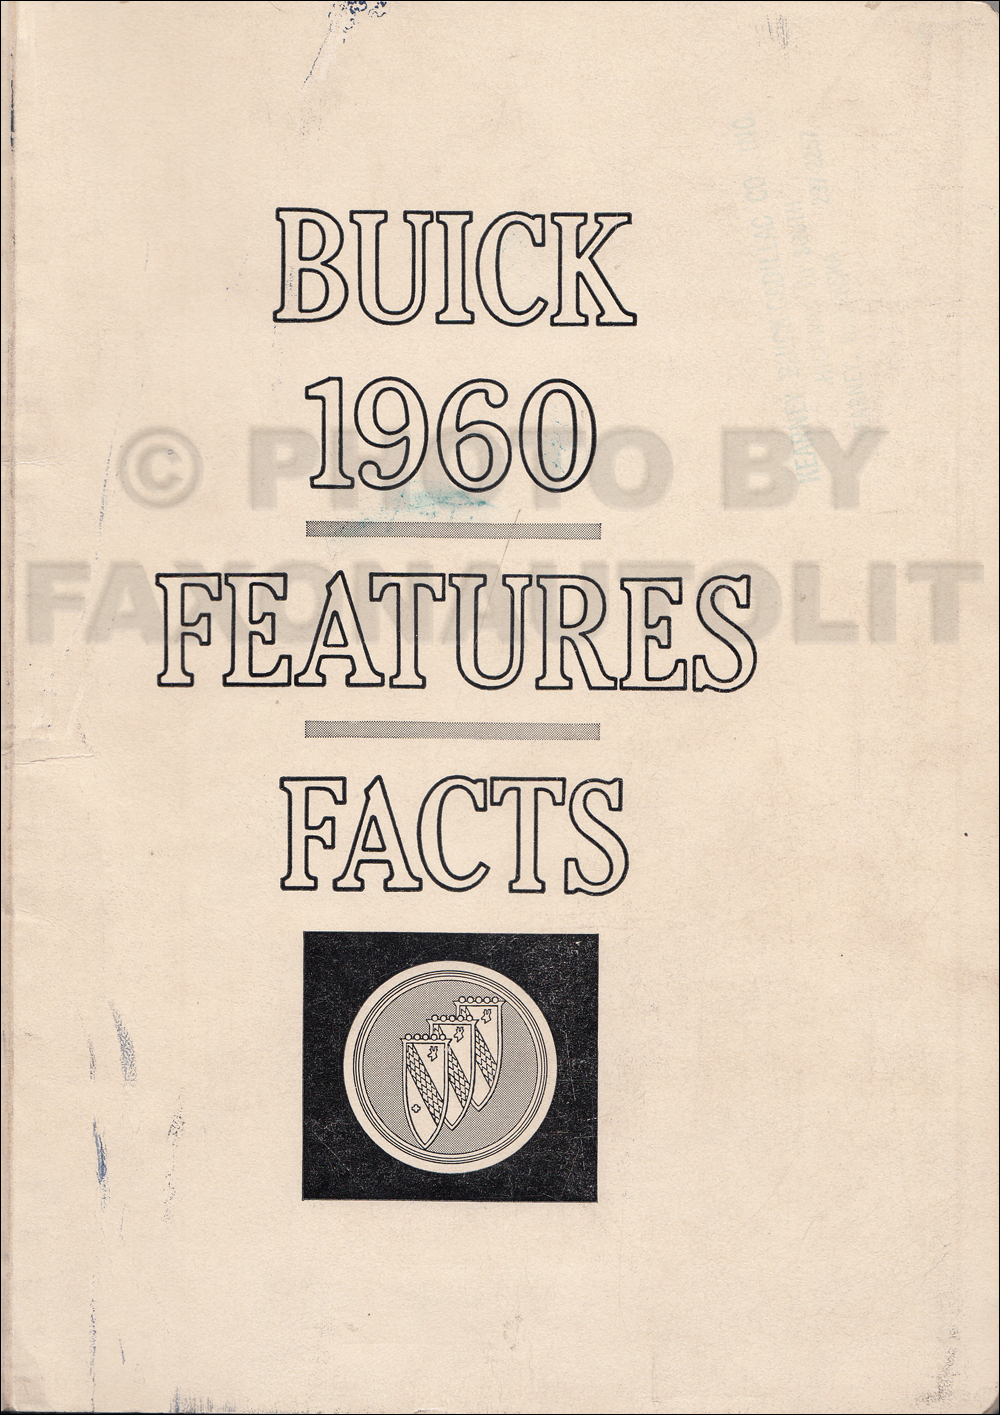 1960 Buick Features Facts Book Original